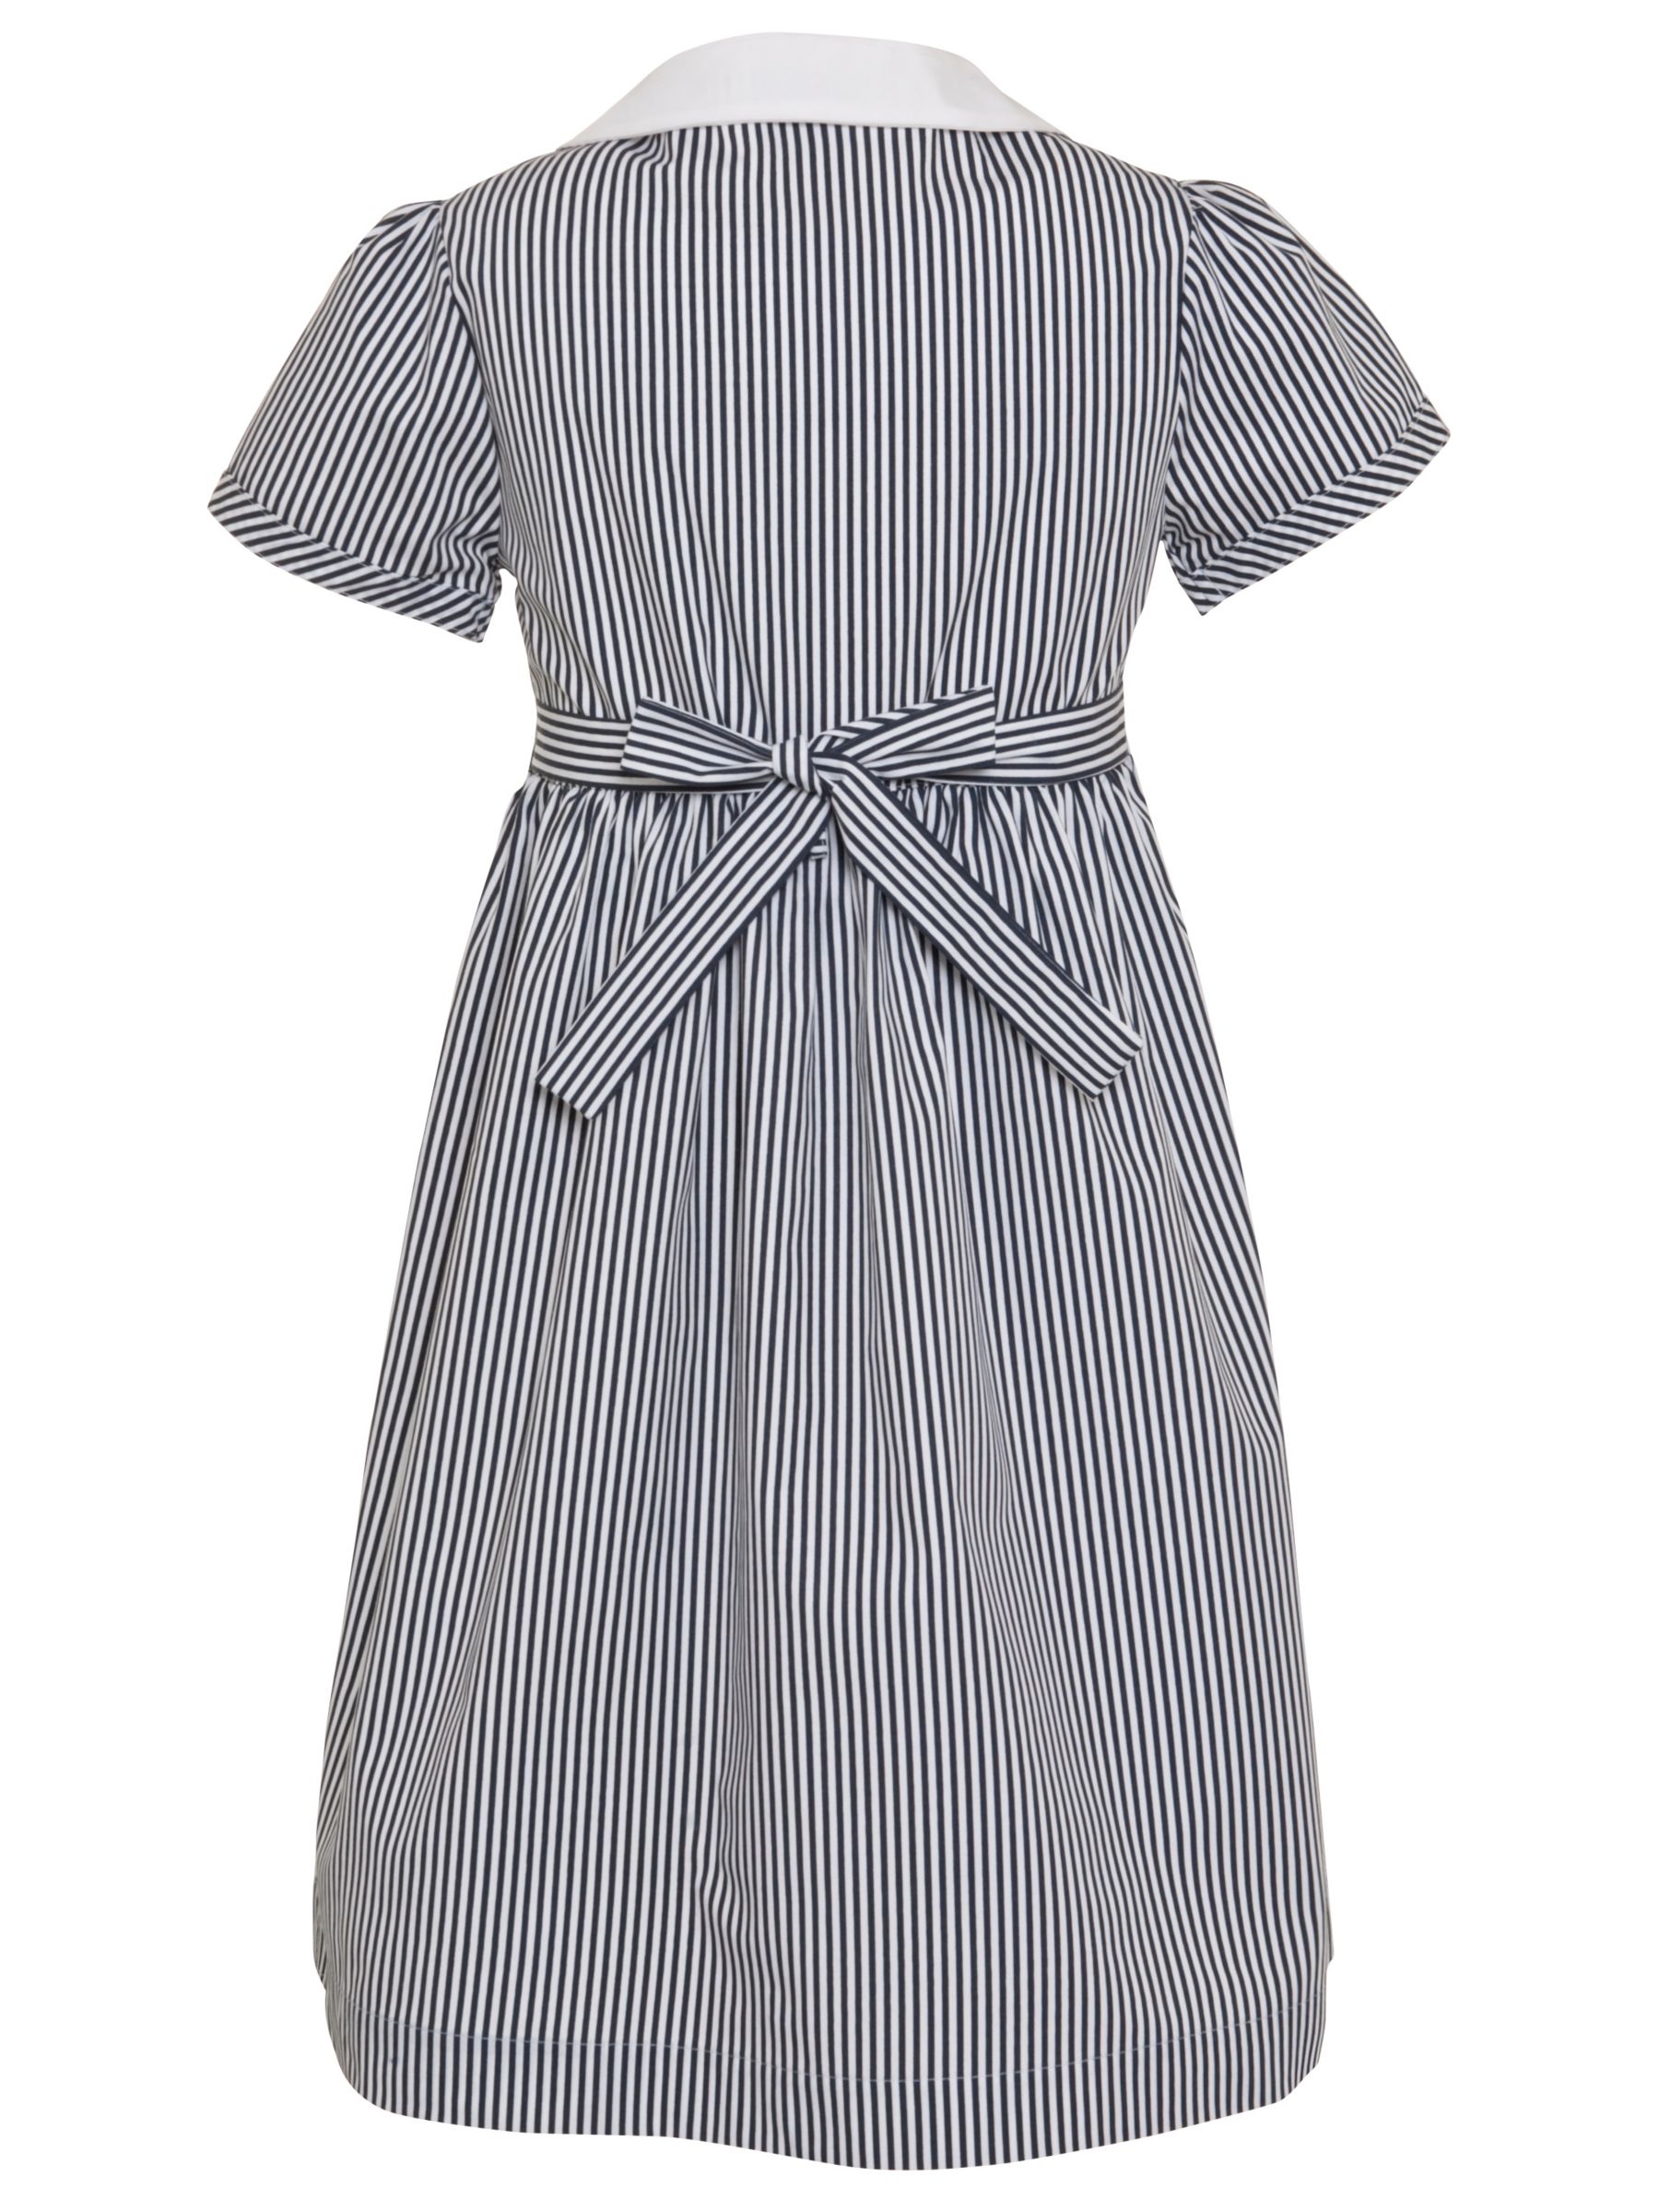 Buy John Lewis School Striped Summer Dress, Navy | John Lewis